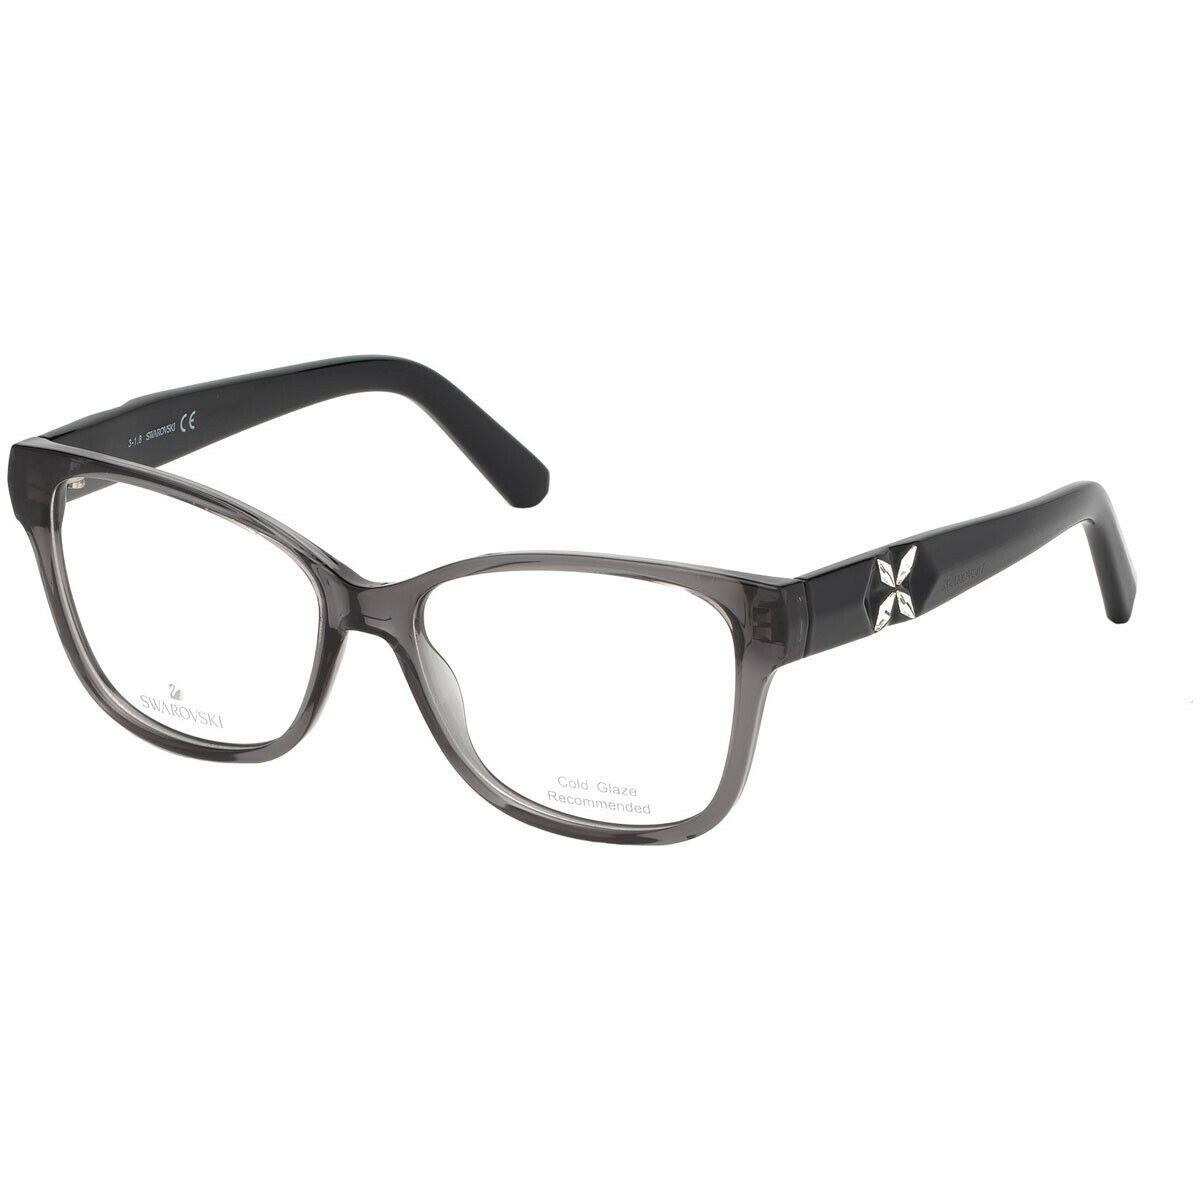 Swarovski SK5282 SW5282 020 Smoke Grey Eyeglasses Frame 54-15-140 Cold Glaze - Grey, Frame: Grey, Lens: